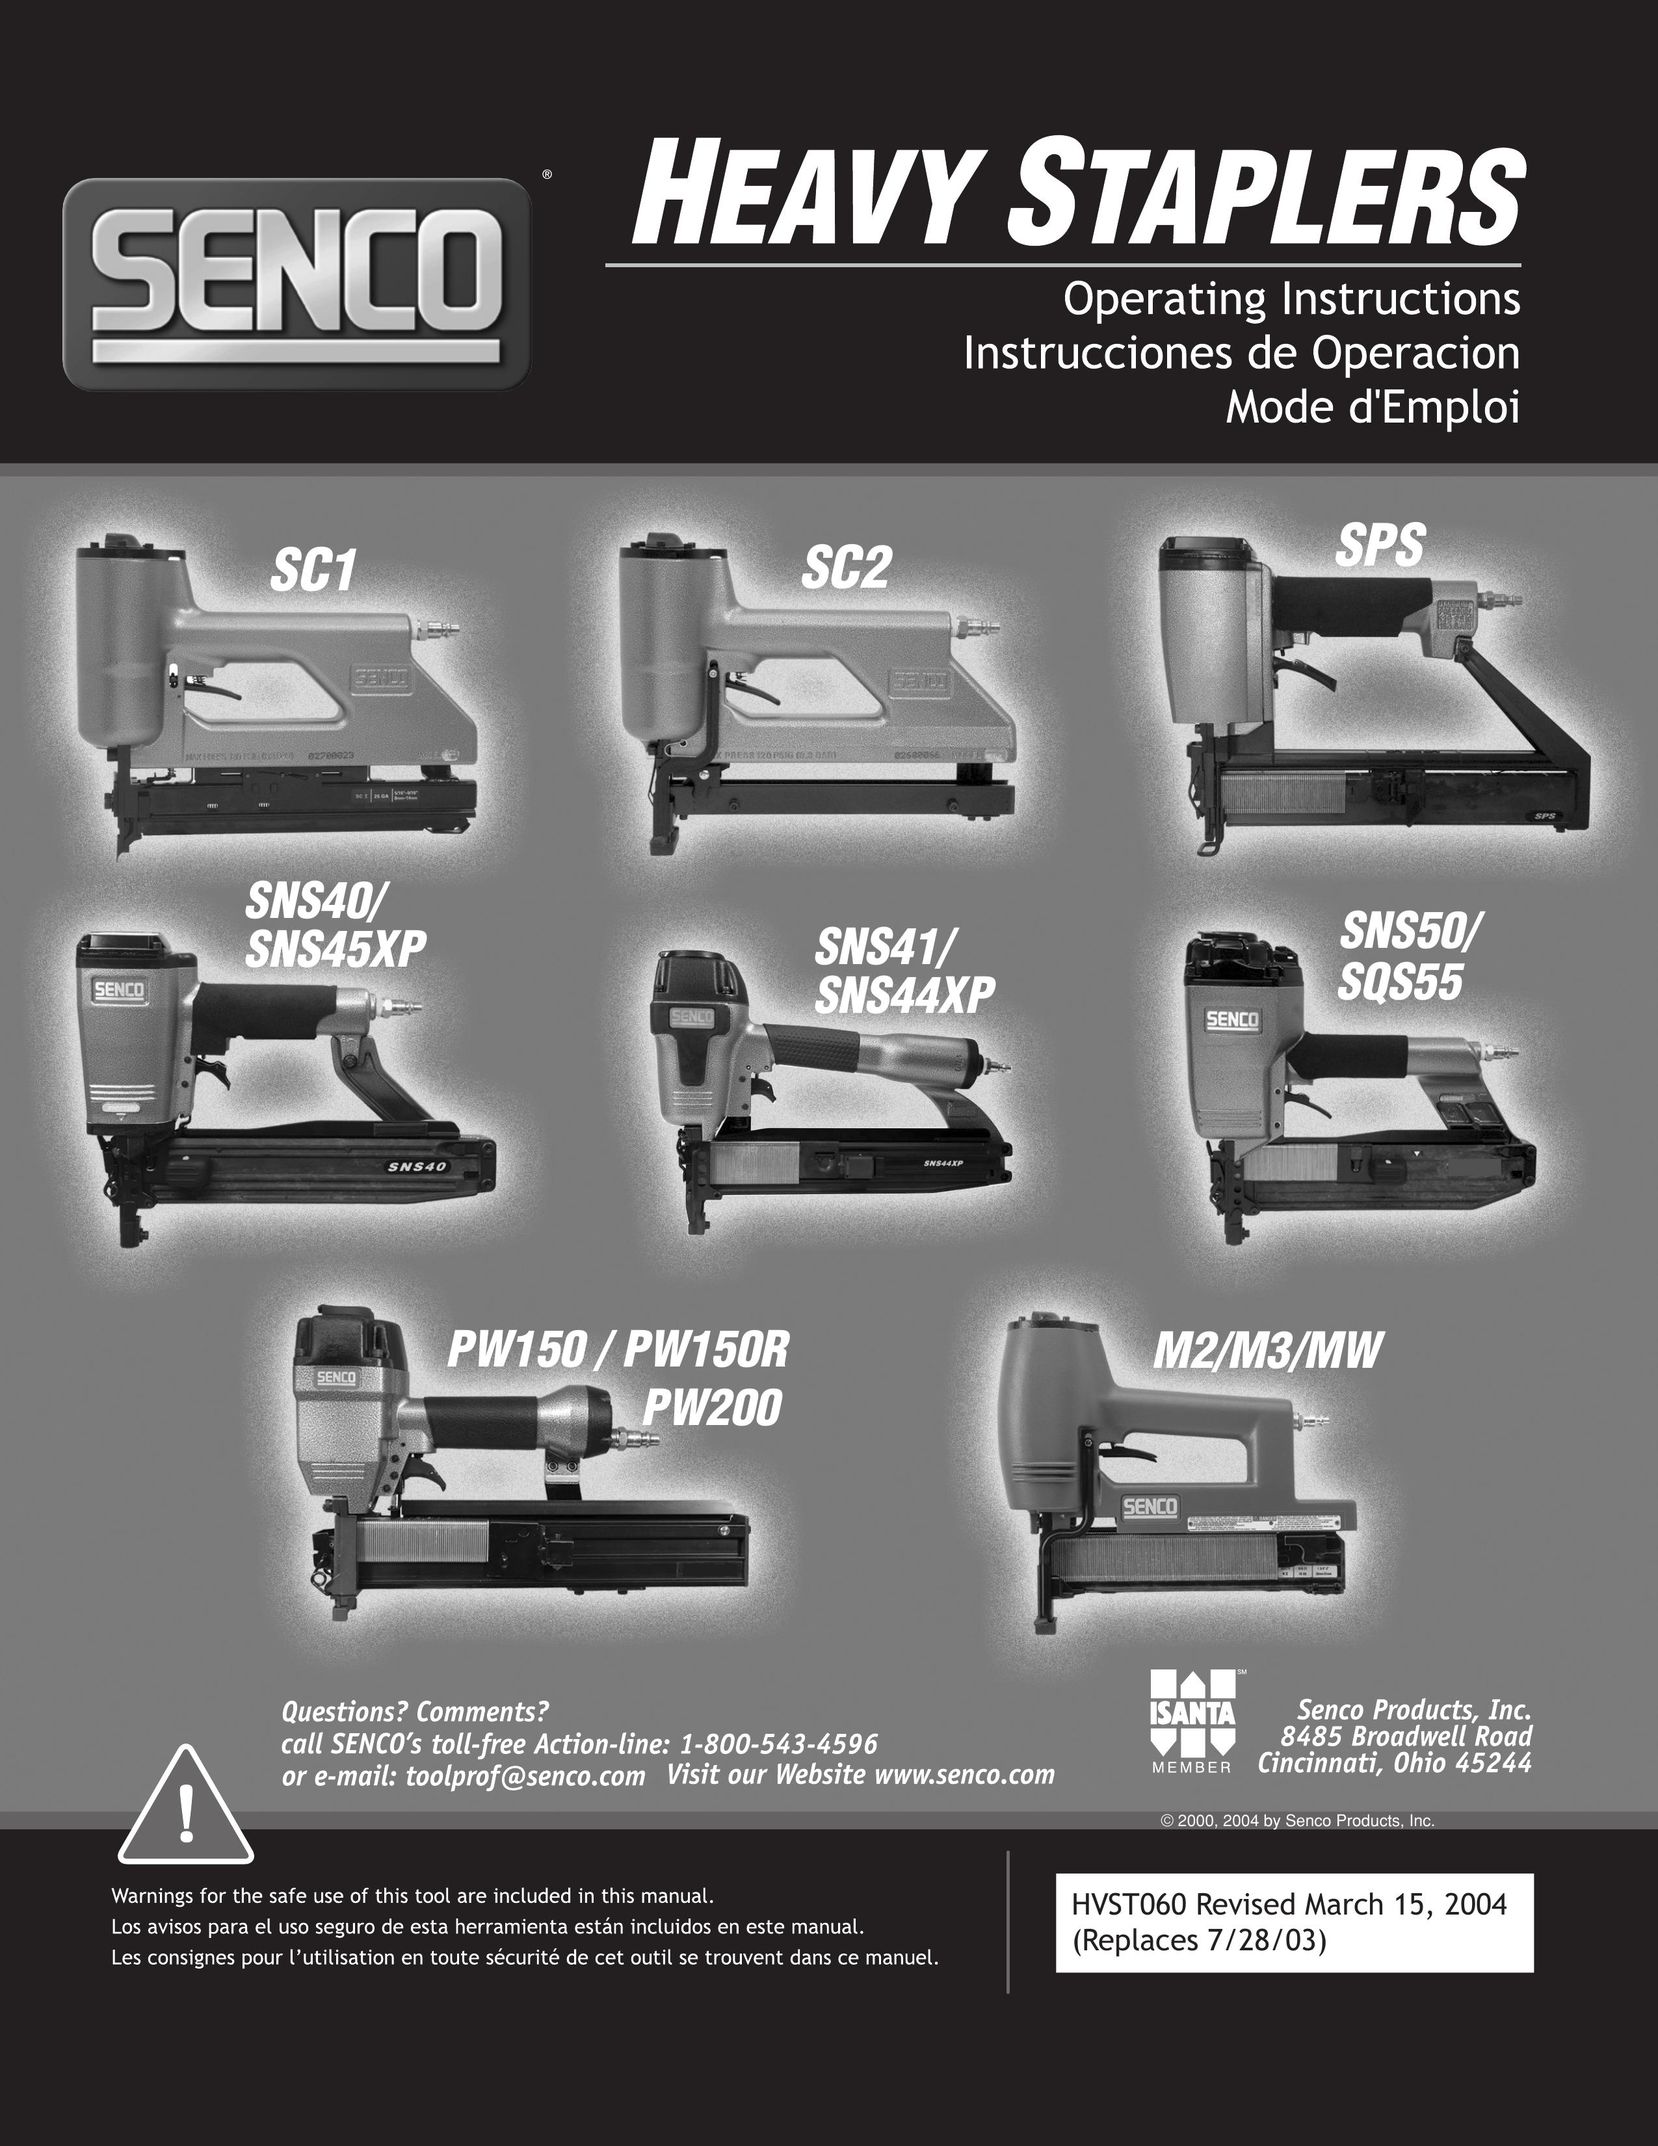 Senco SNS50 Staple Gun User Manual